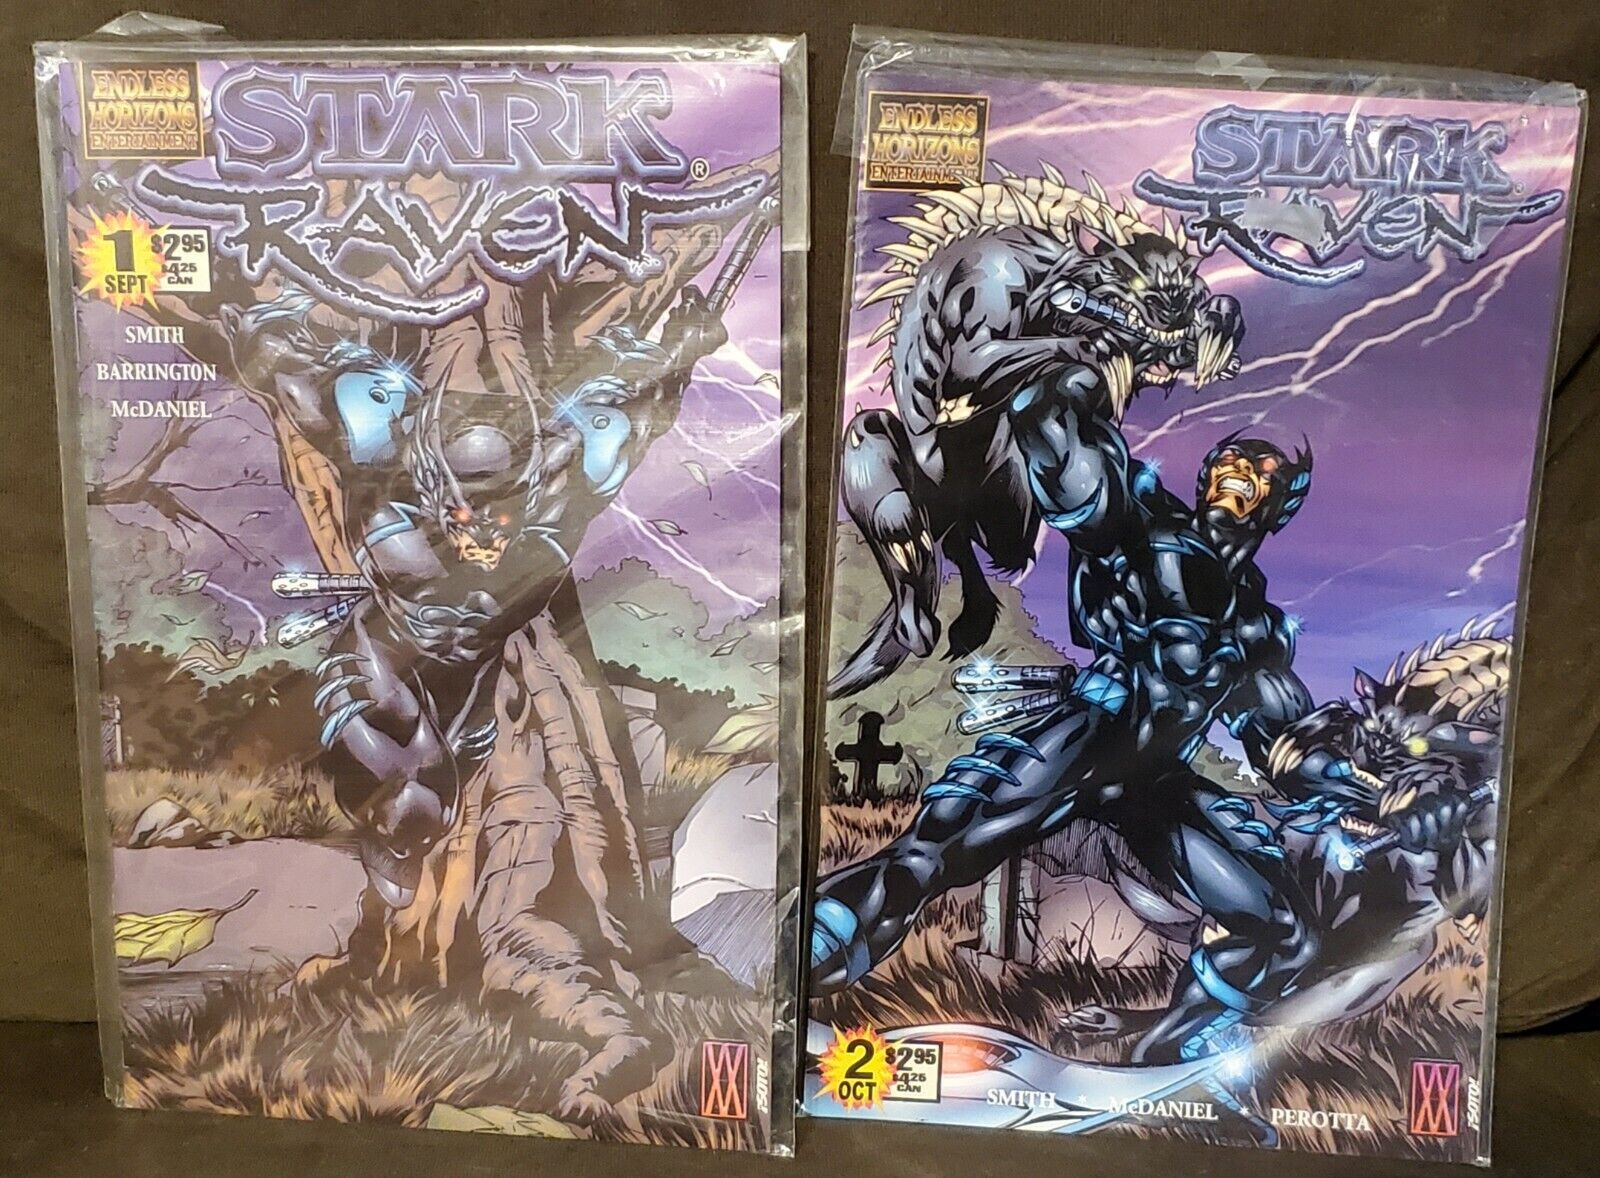 Stark Raven #1 September 2000 Endless Horizons Entertainment Comic Book & #2